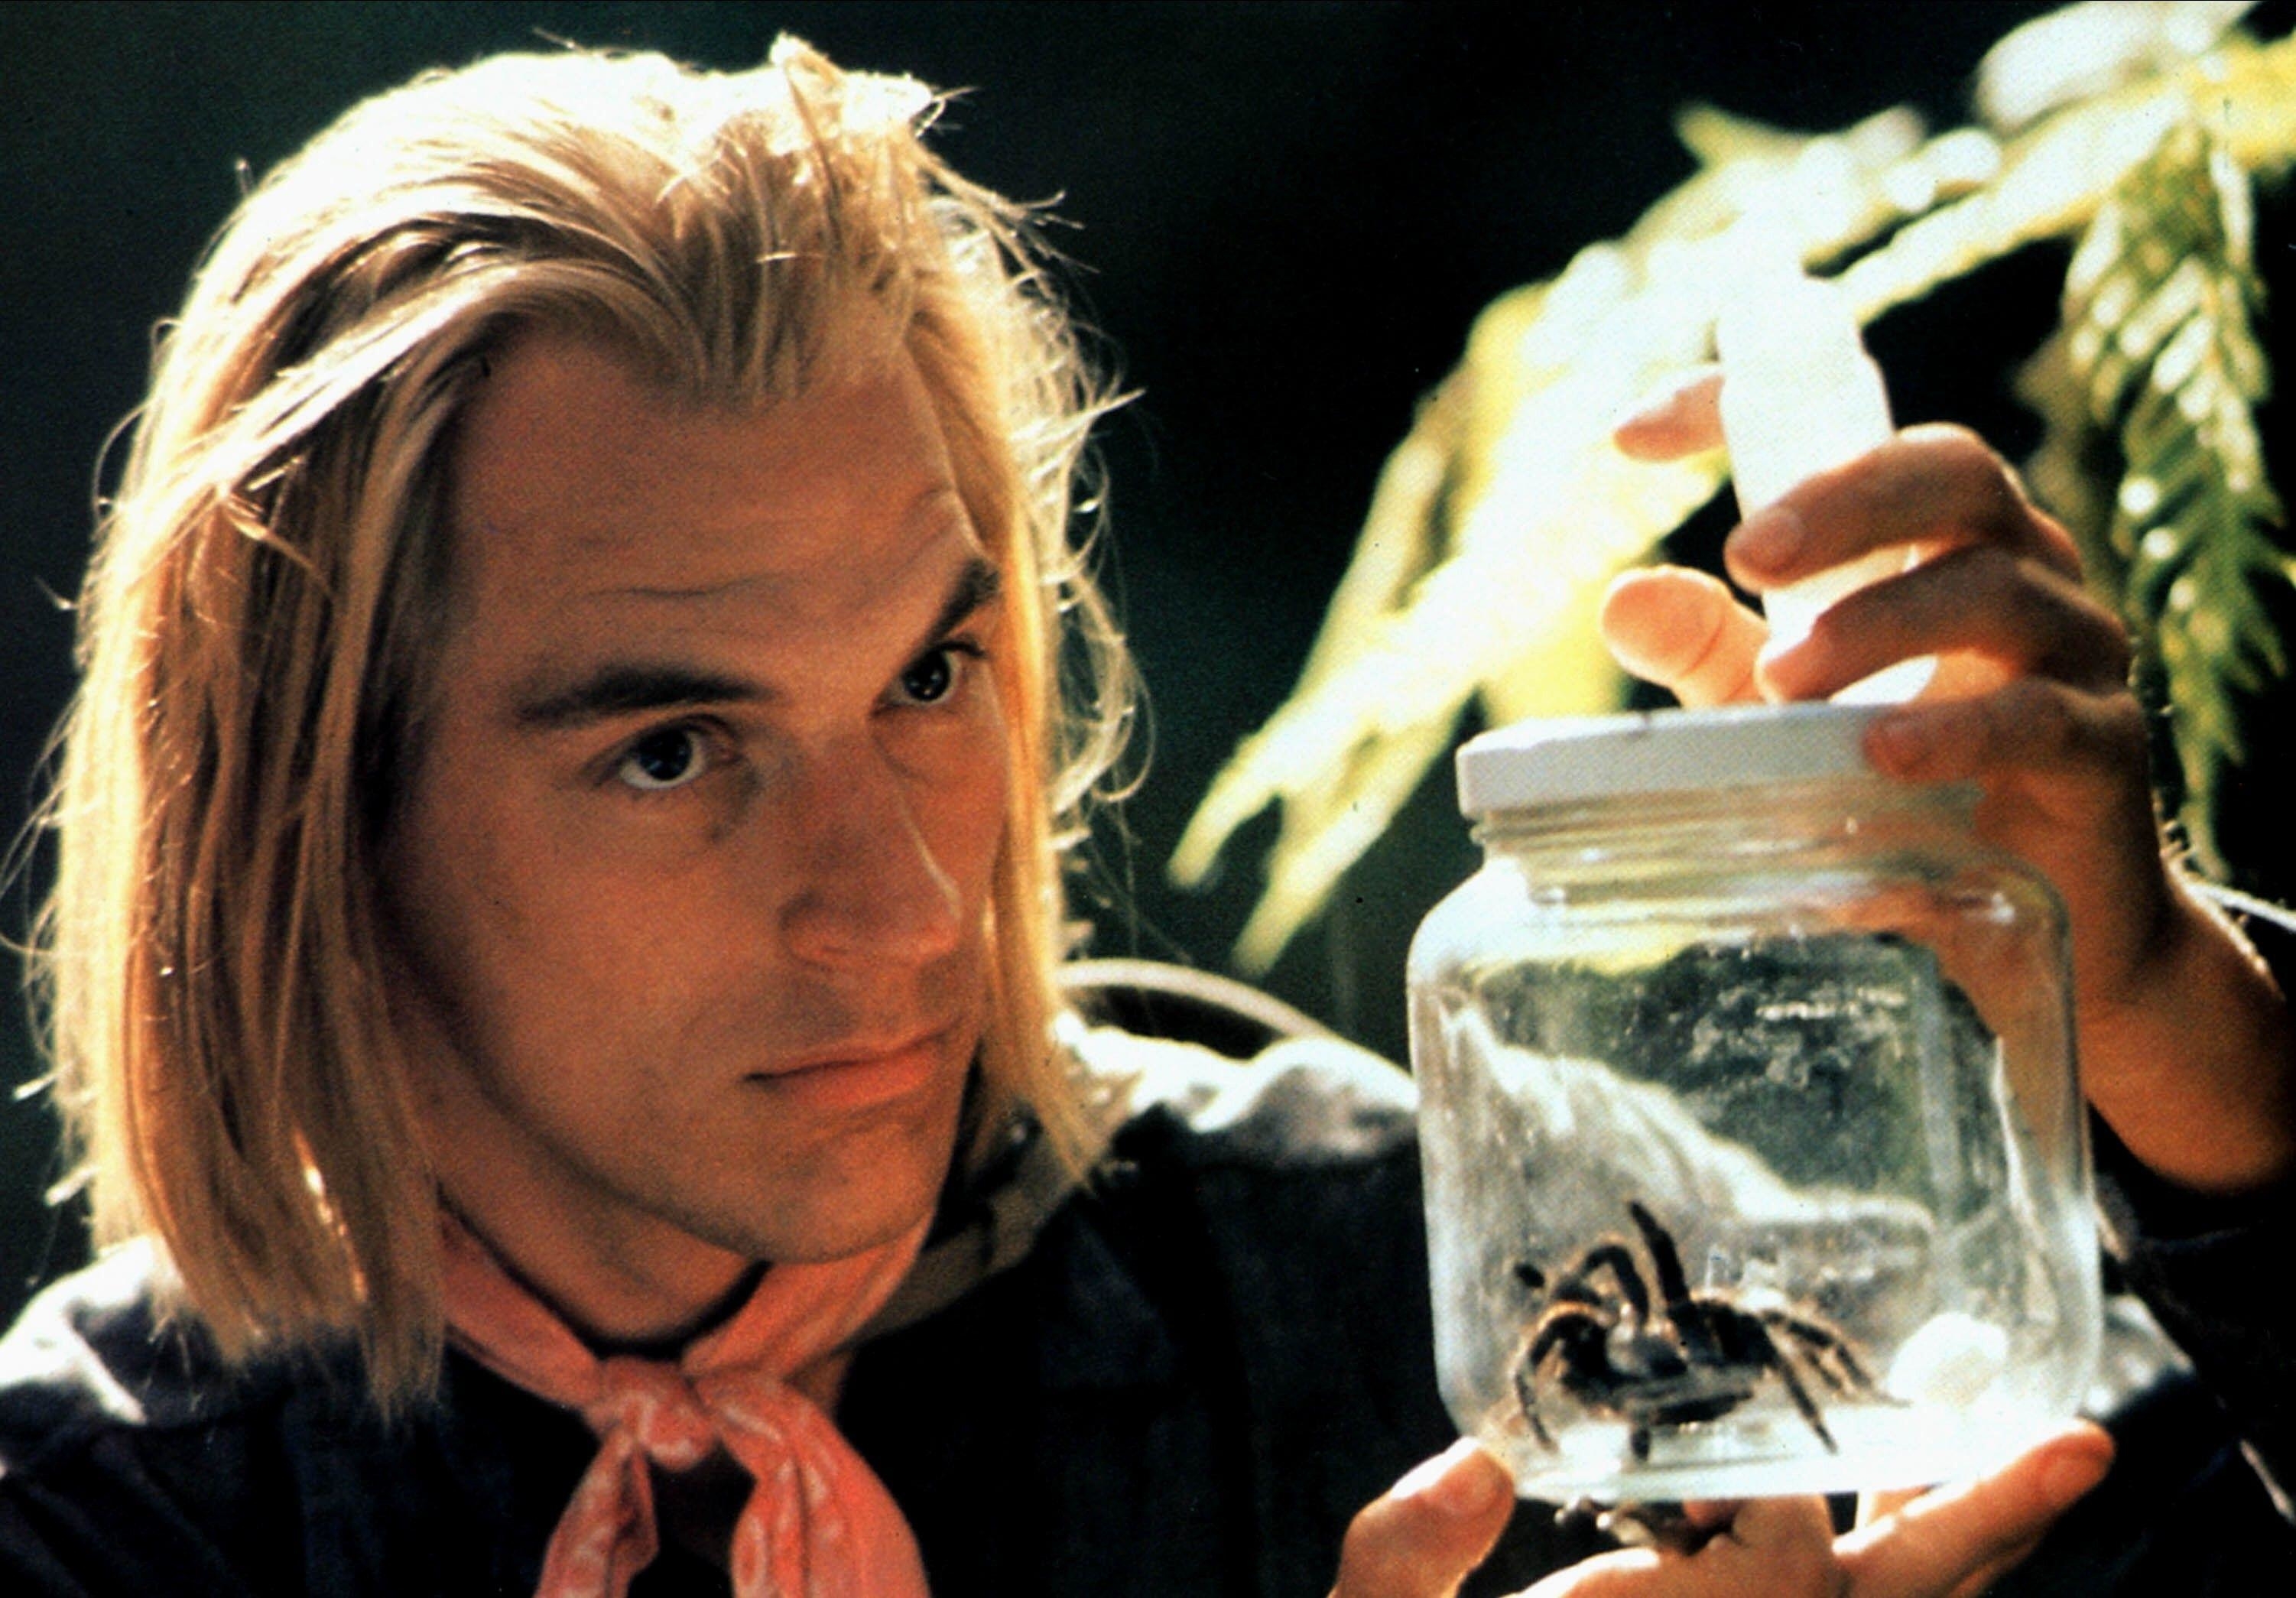 Julian Sands showcases a spider in a jar